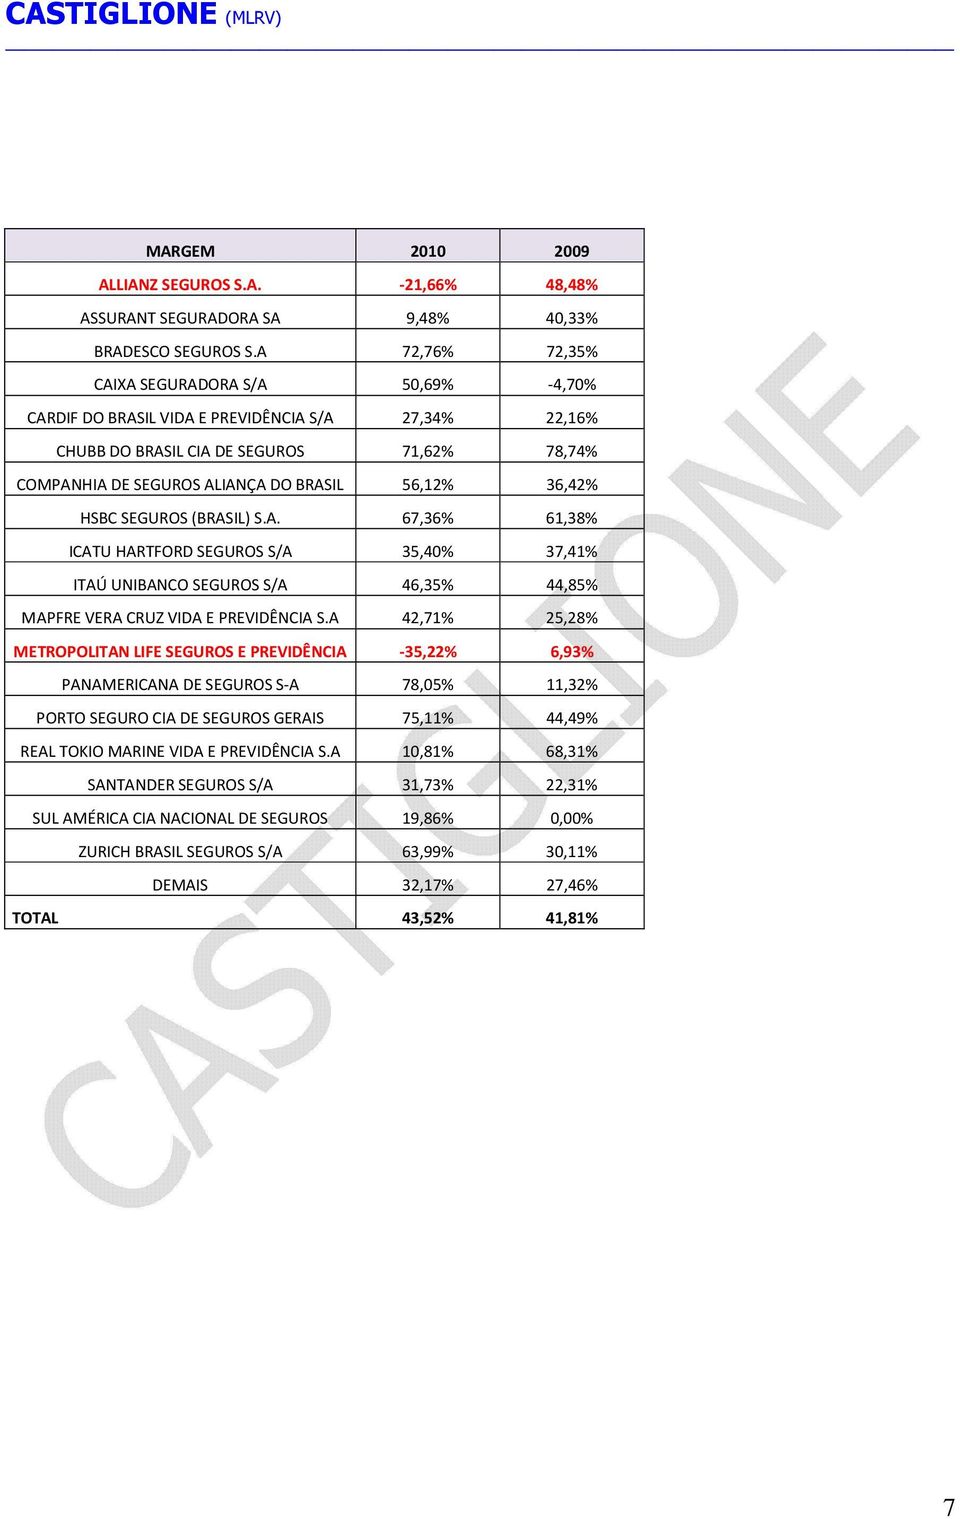 36,42% HSBC SEGUROS (BRASIL) S.A. 67,36% 61,38% ICATU HARTFORD SEGUROS S/A 35,40% 37,41% ITAÚ UNIBANCO SEGUROS S/A 46,35% 44,85% MAPFRE VERA CRUZ VIDA E PREVIDÊNCIA S.